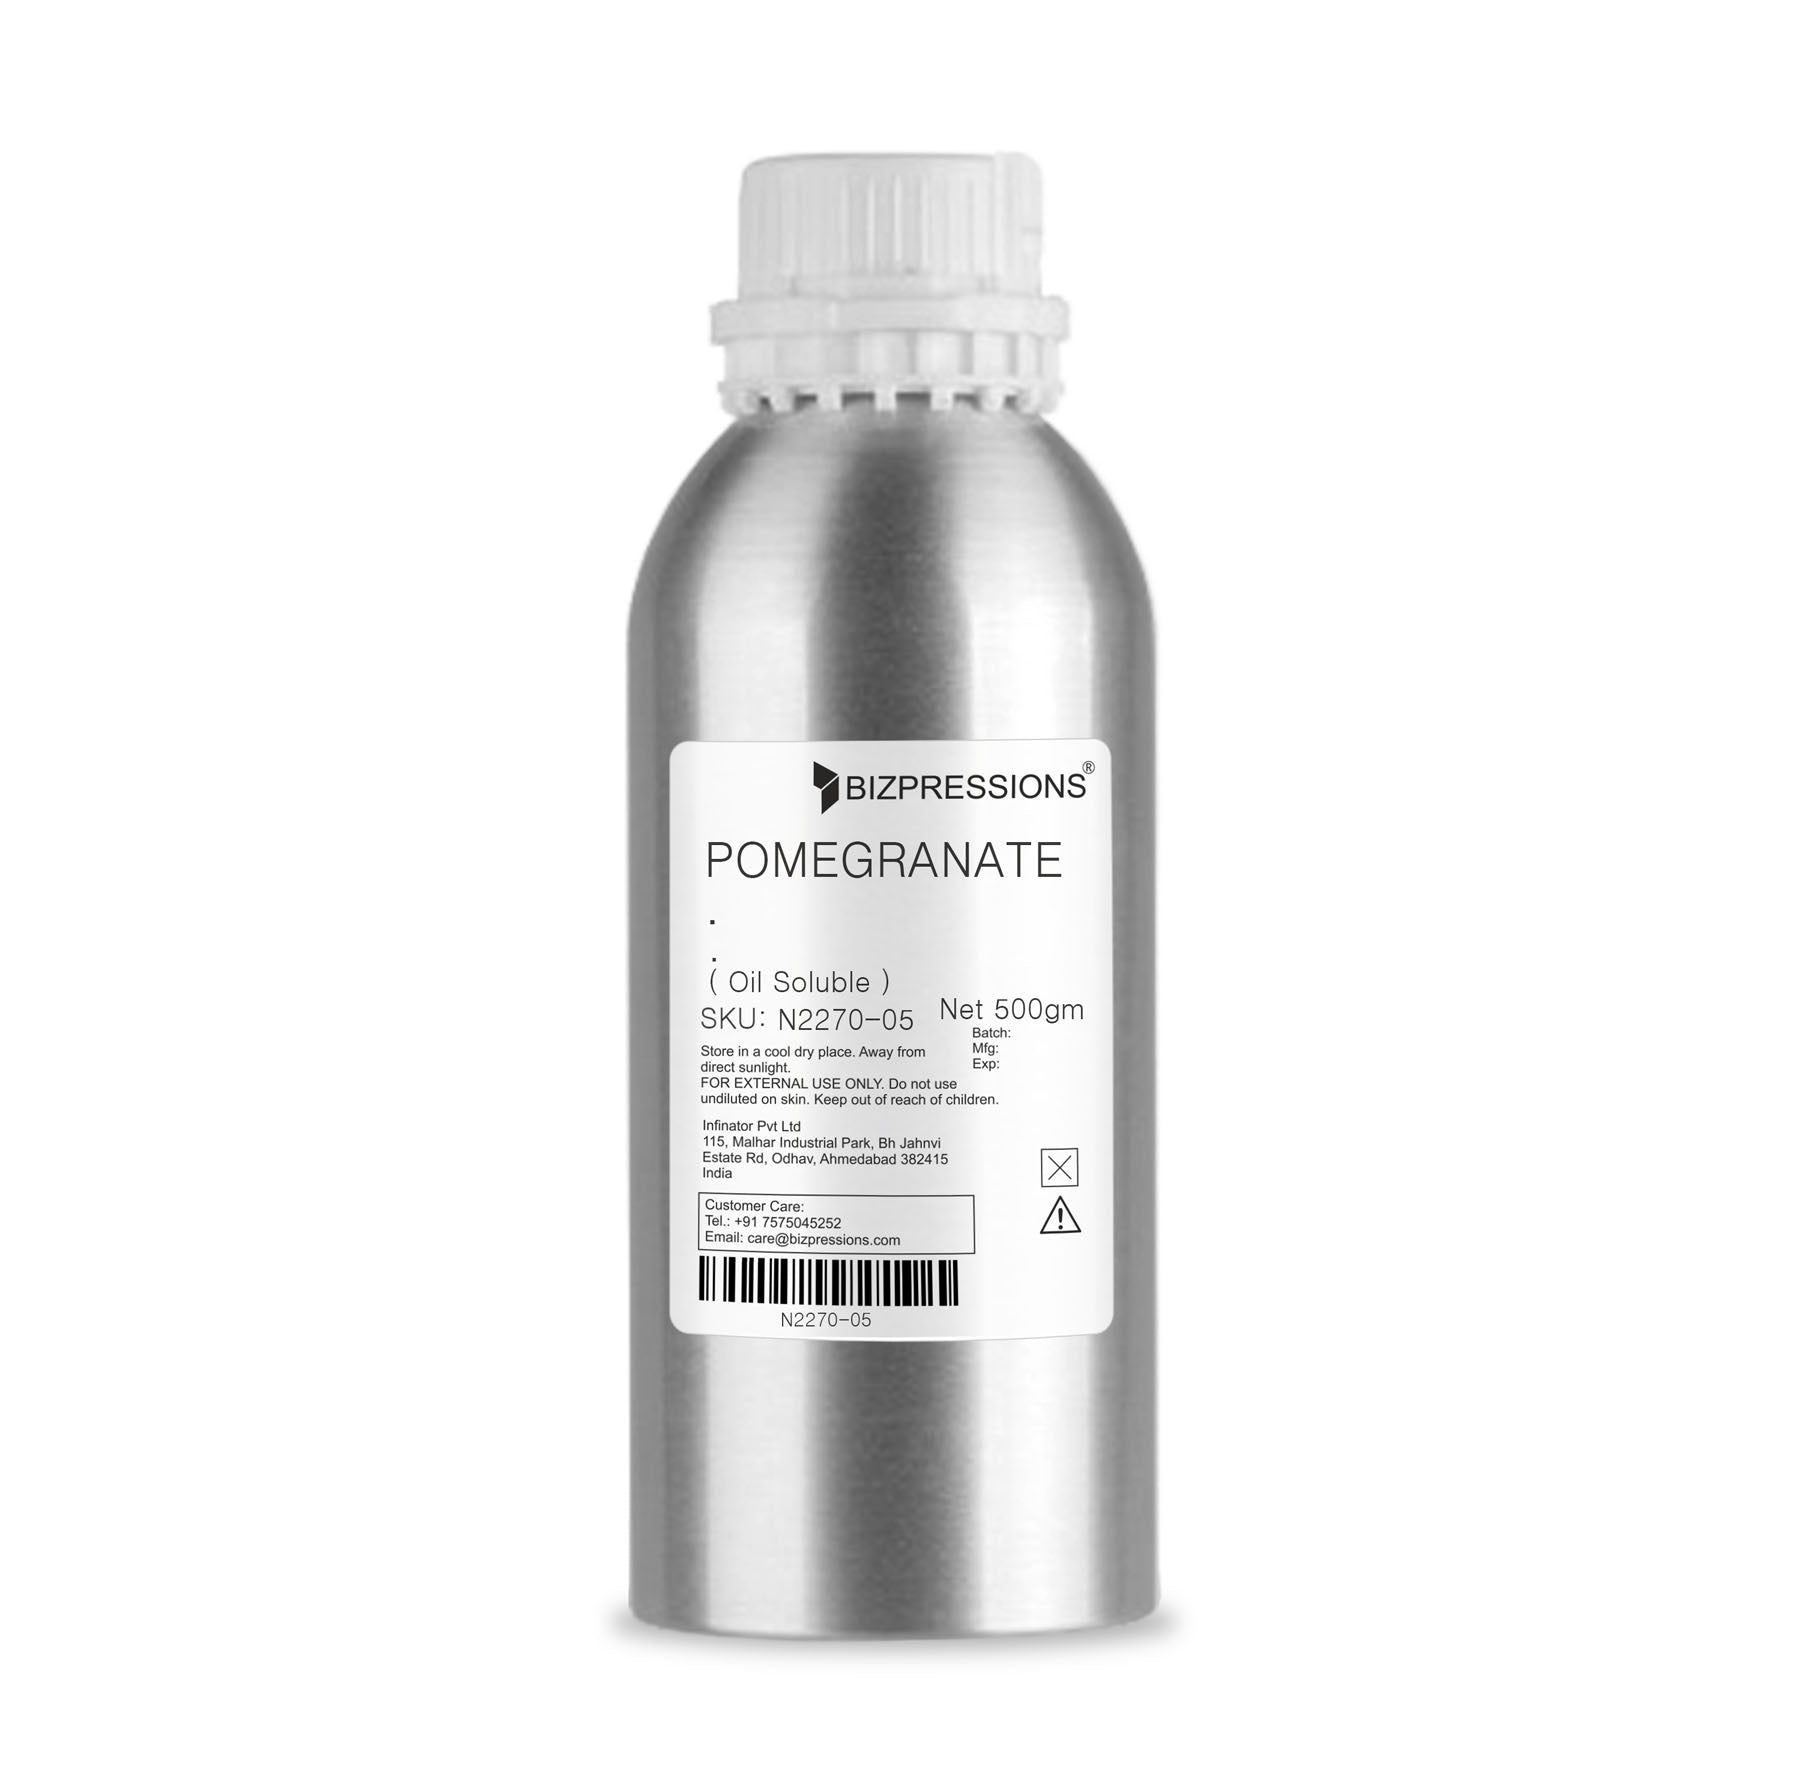 POMEGRANATE - Fragrance ( Oil Soluble ) - 500 gm